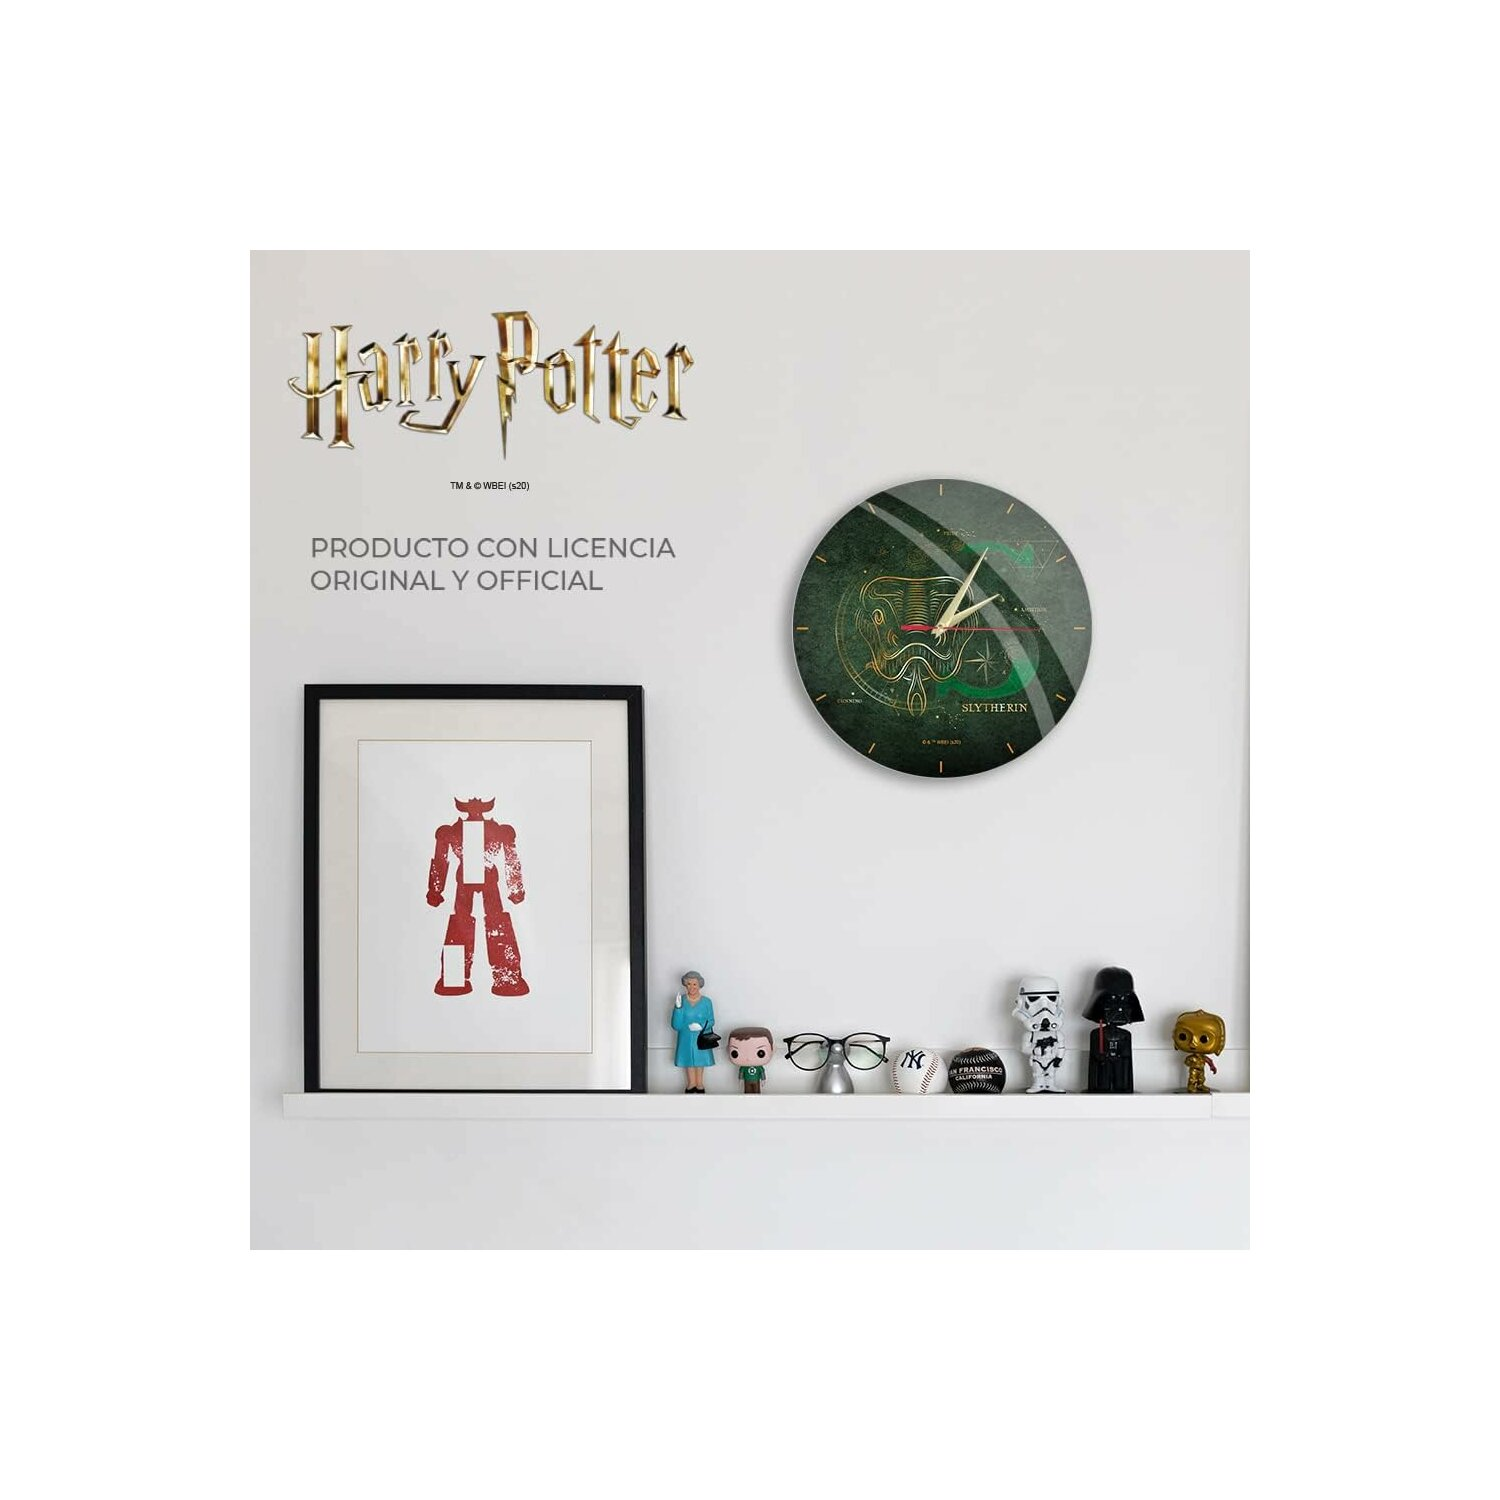 POTTER Hogwarts 019 HARRY Wanduhr